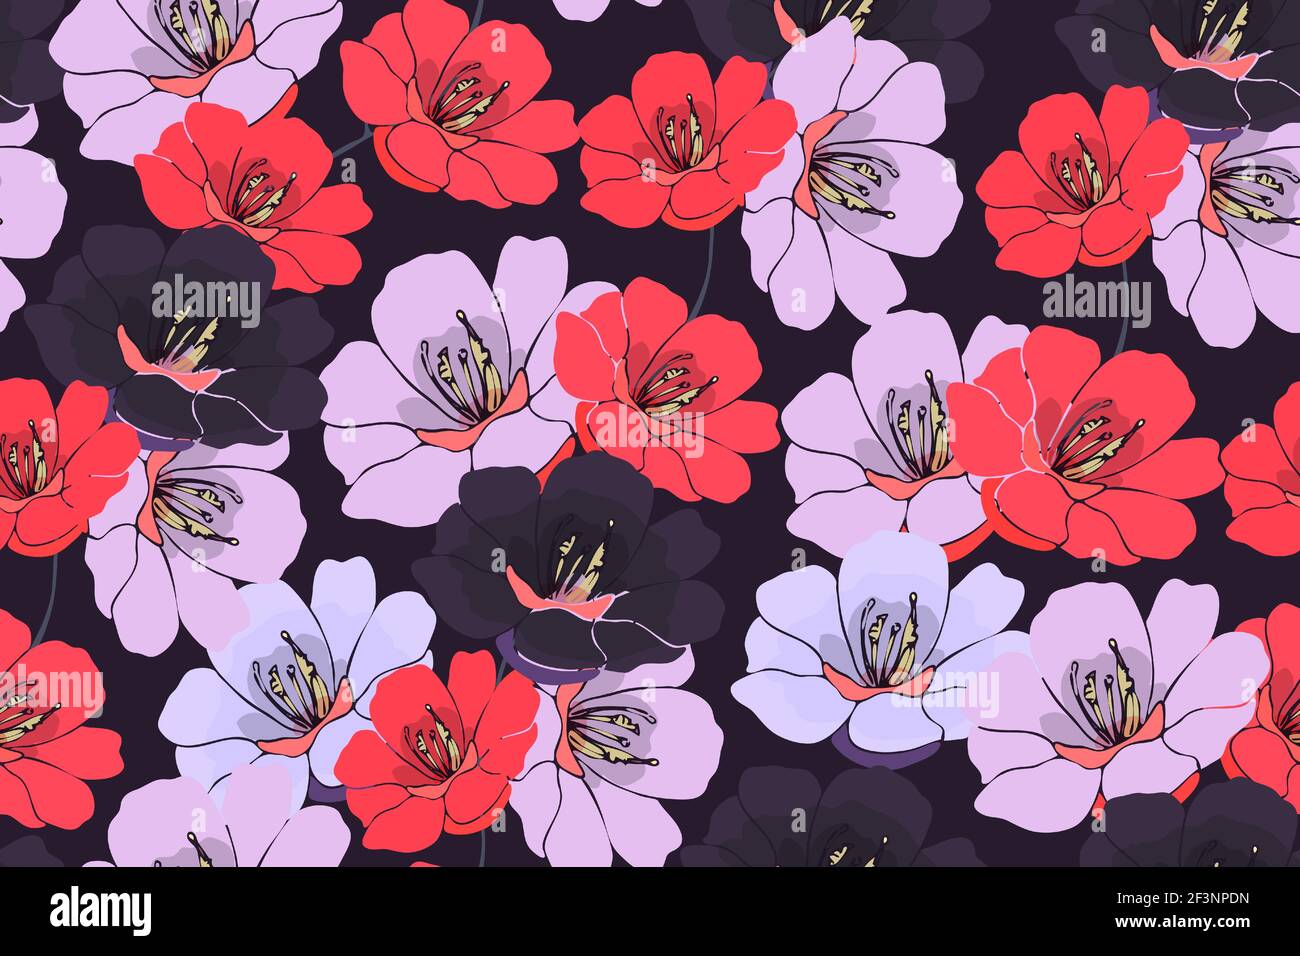 Vector floral seamless pattern. Pink, red, dark purple flowers. Stock Vector